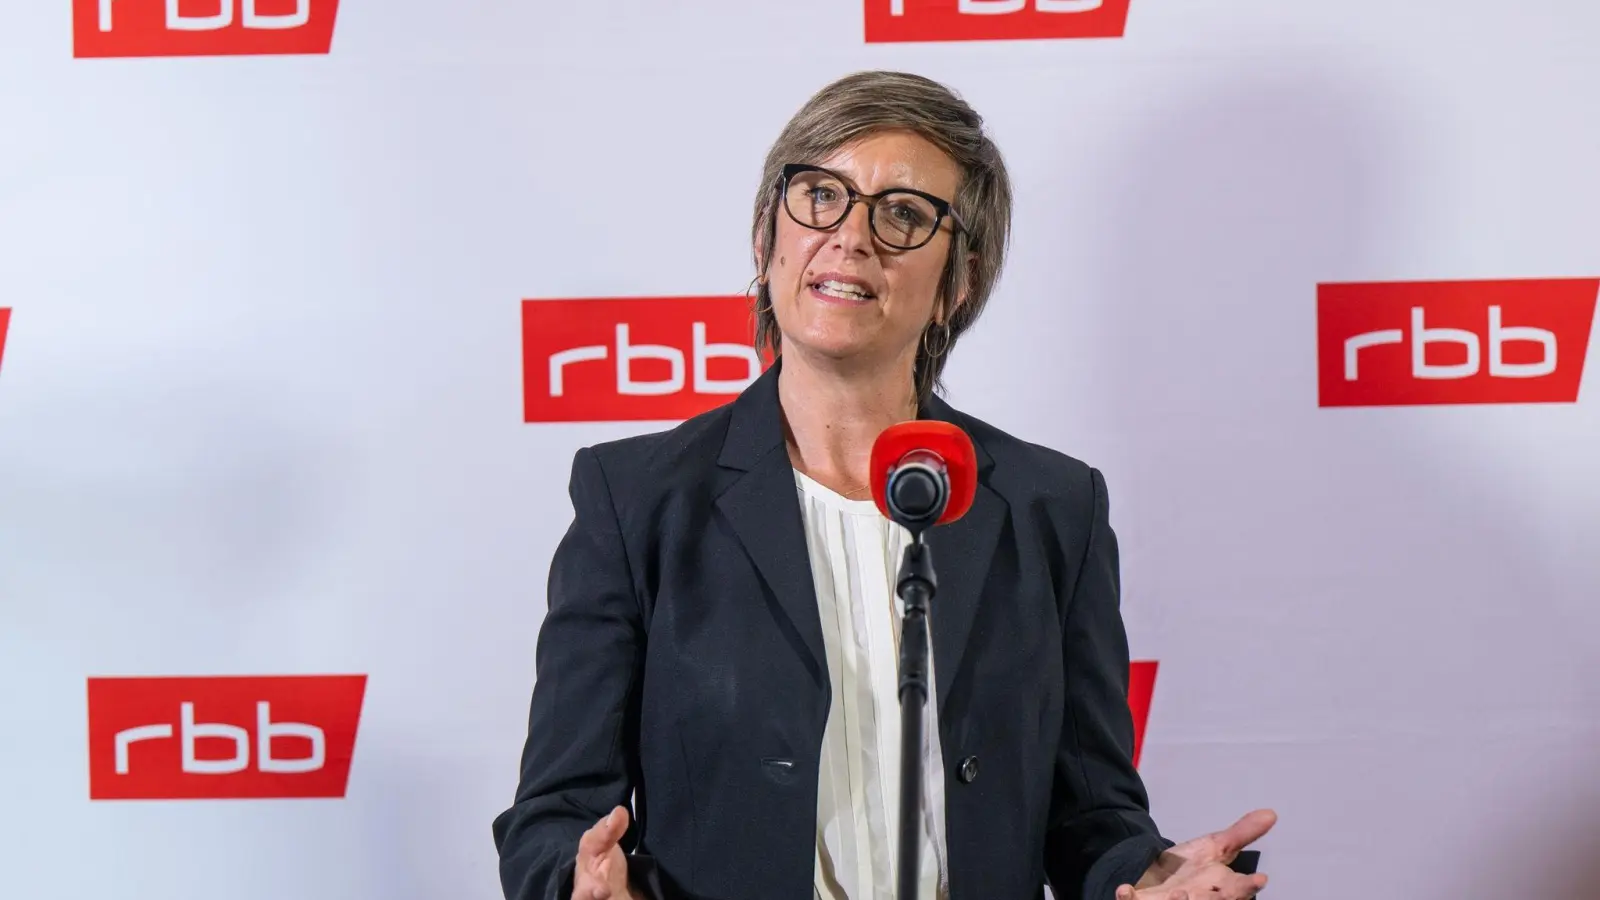 Ulrike Demmer ist die neue RBB-Intendantin. (Foto: Monika Skolimowska/dpa)